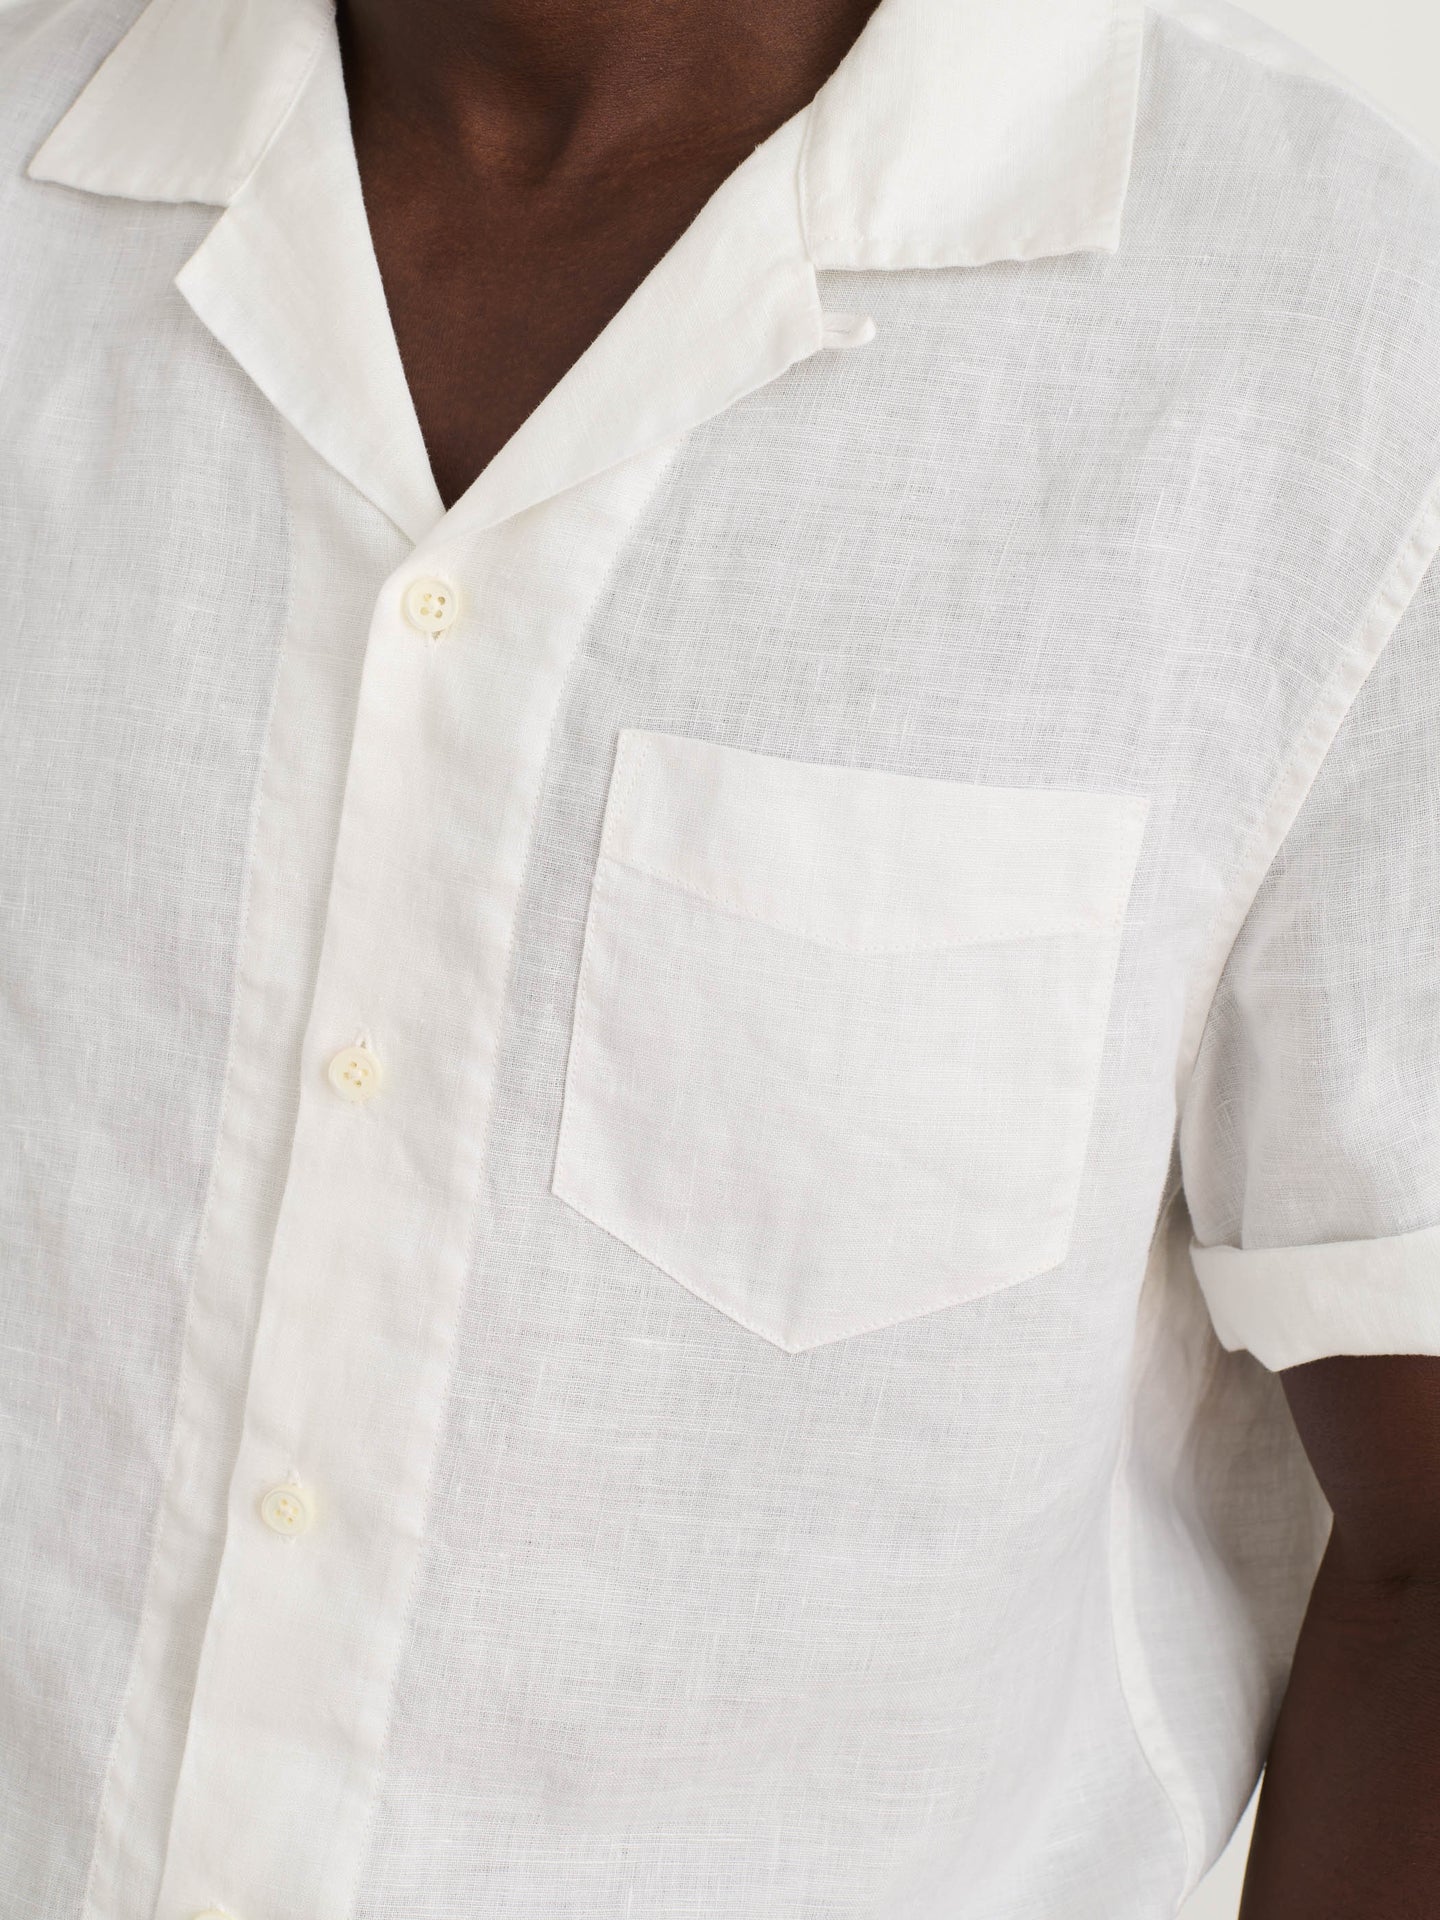 MAXamp;Co. Kids spread-collar shirt jacket - White